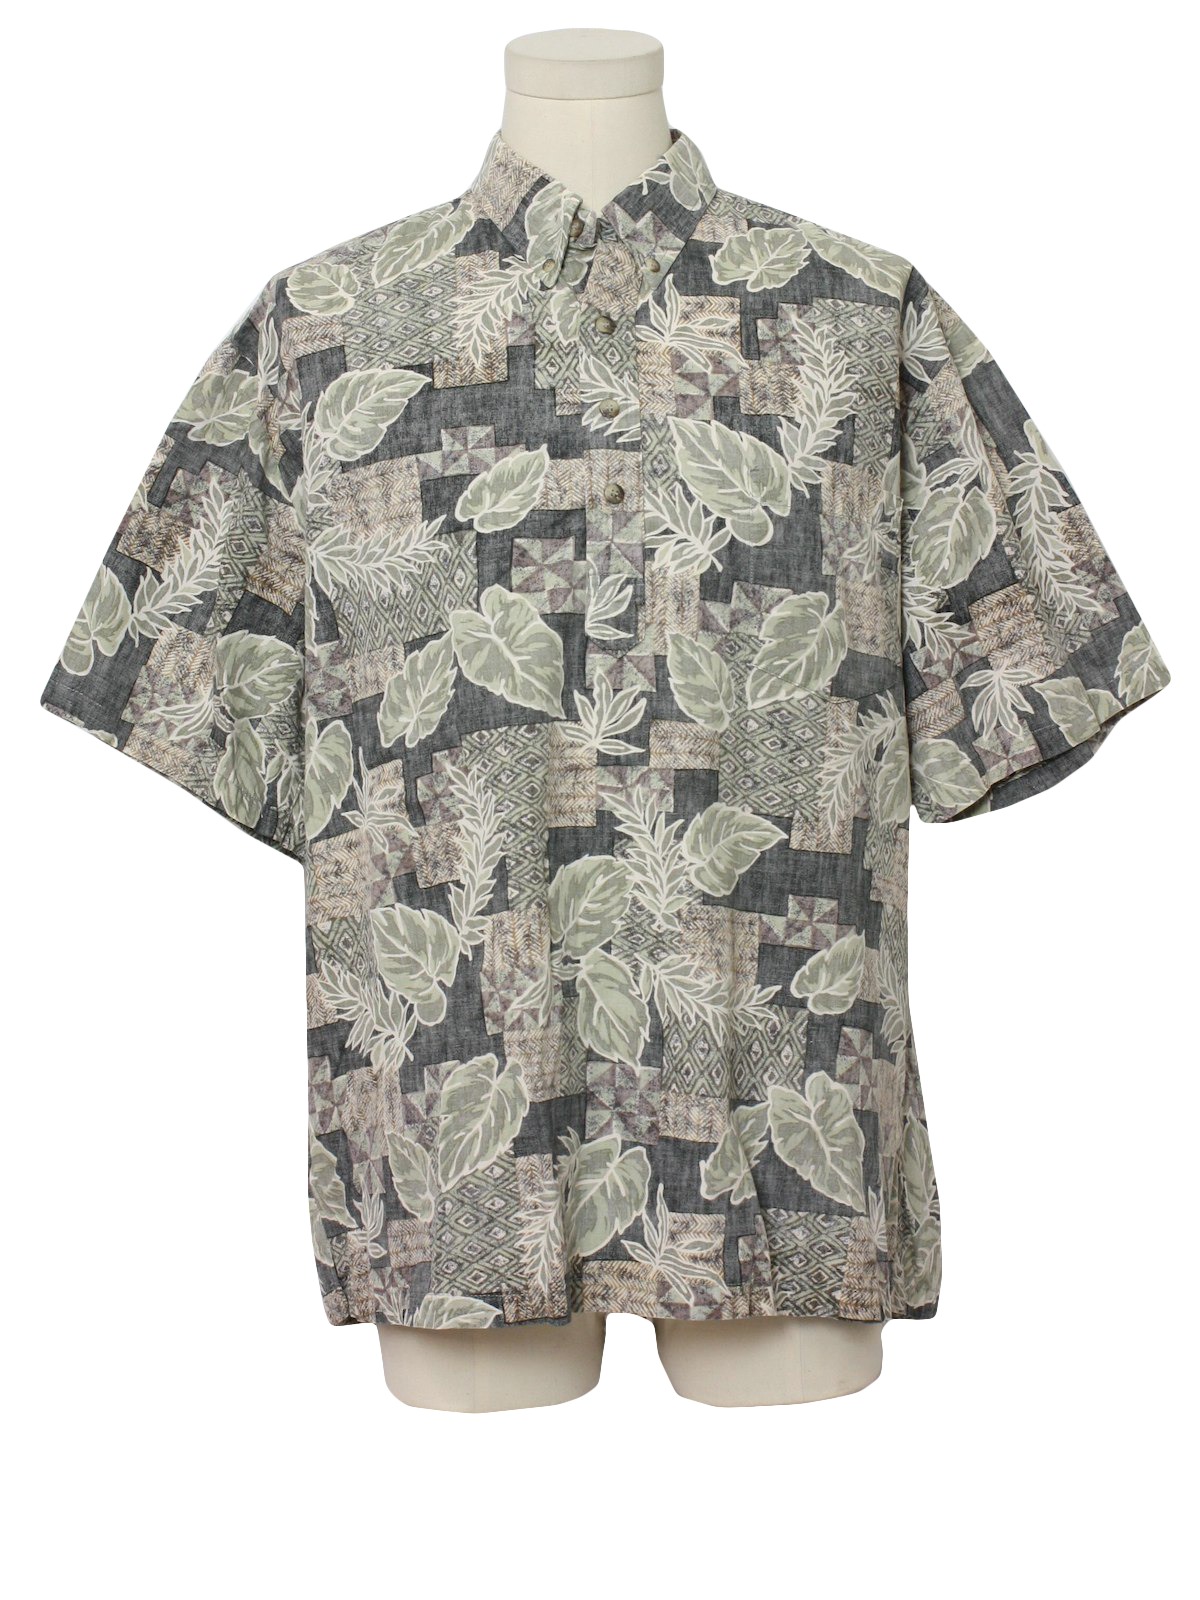 Retro Nineties Hawaiian Shirt: 90s -Cooke Street- Mens Black background ...